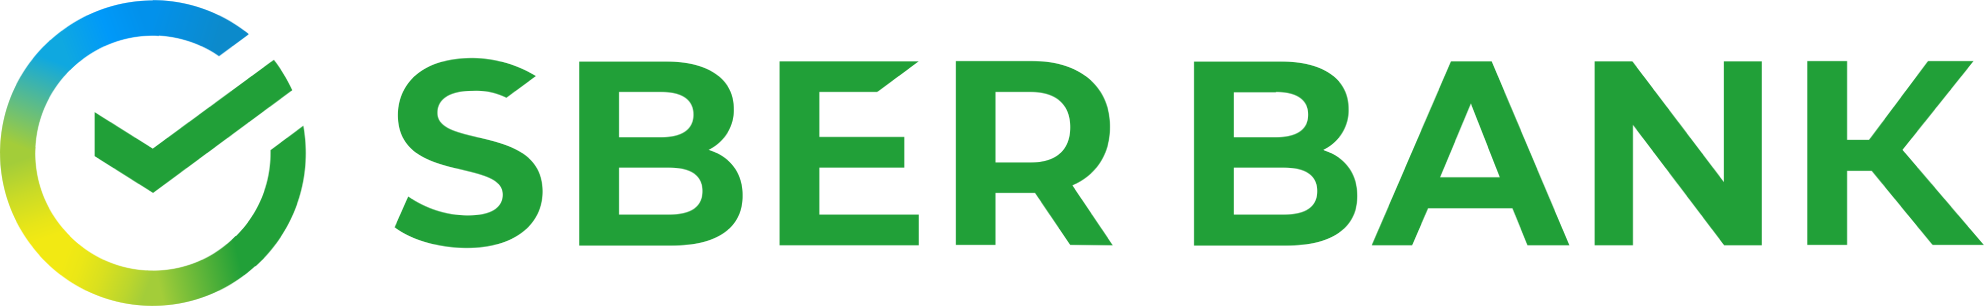 Sberbank logo large (transparent PNG)